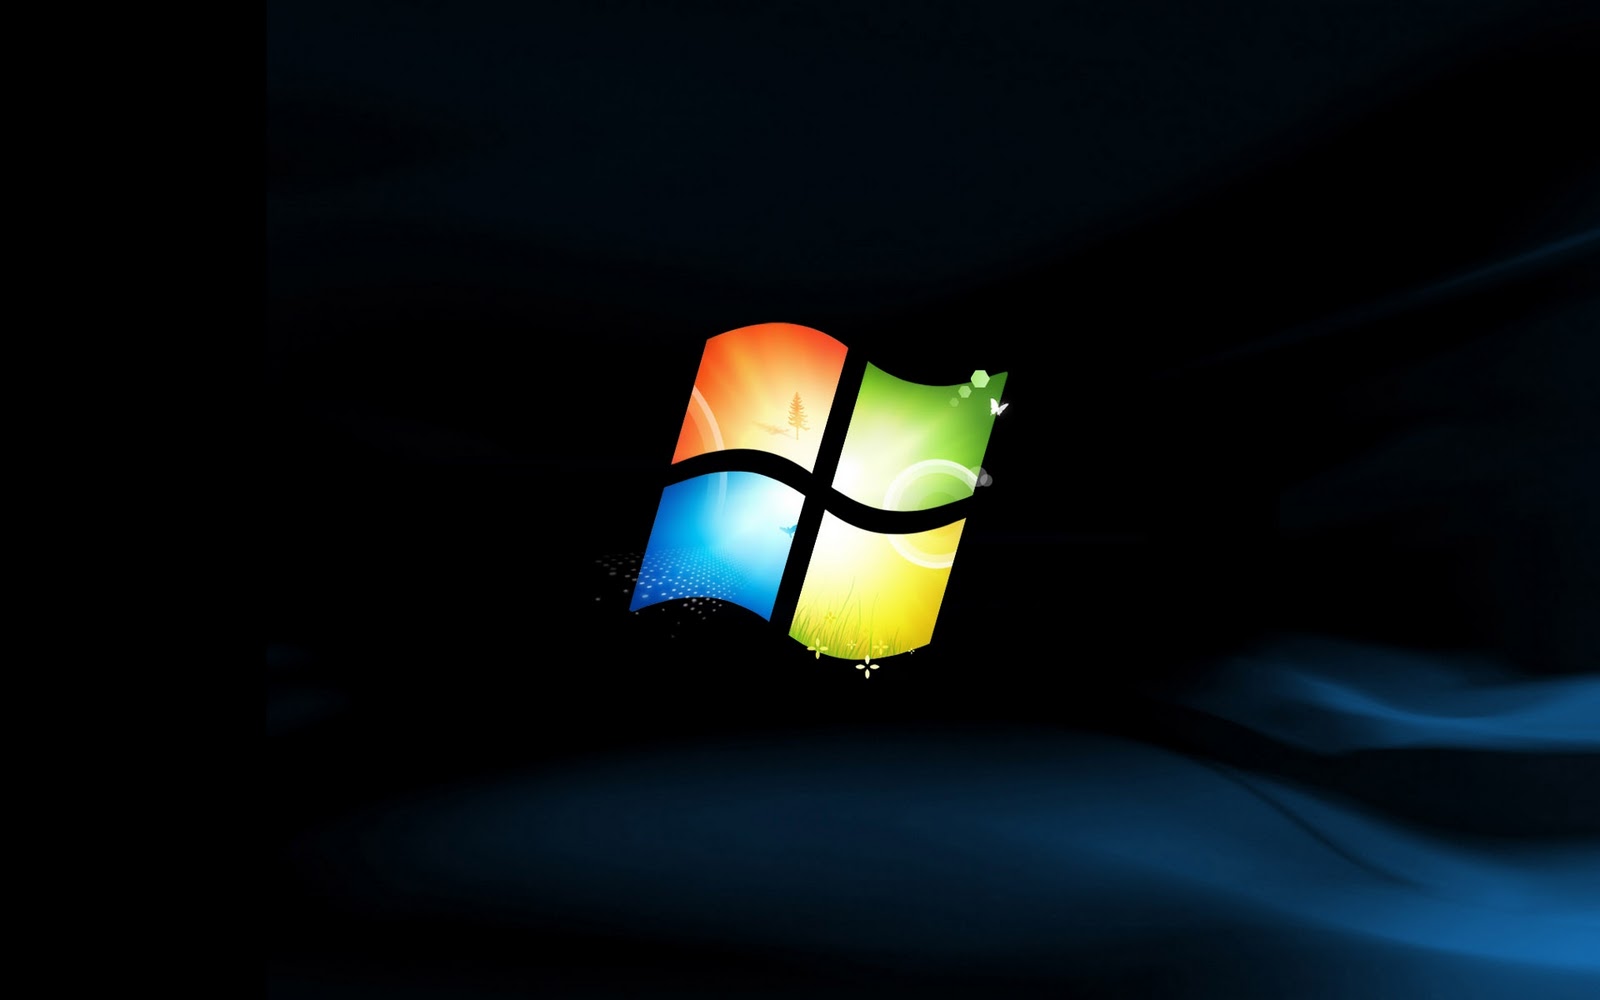 Windows 7 achtergronden windows 7 wallpapers 18jpg 1600x1000